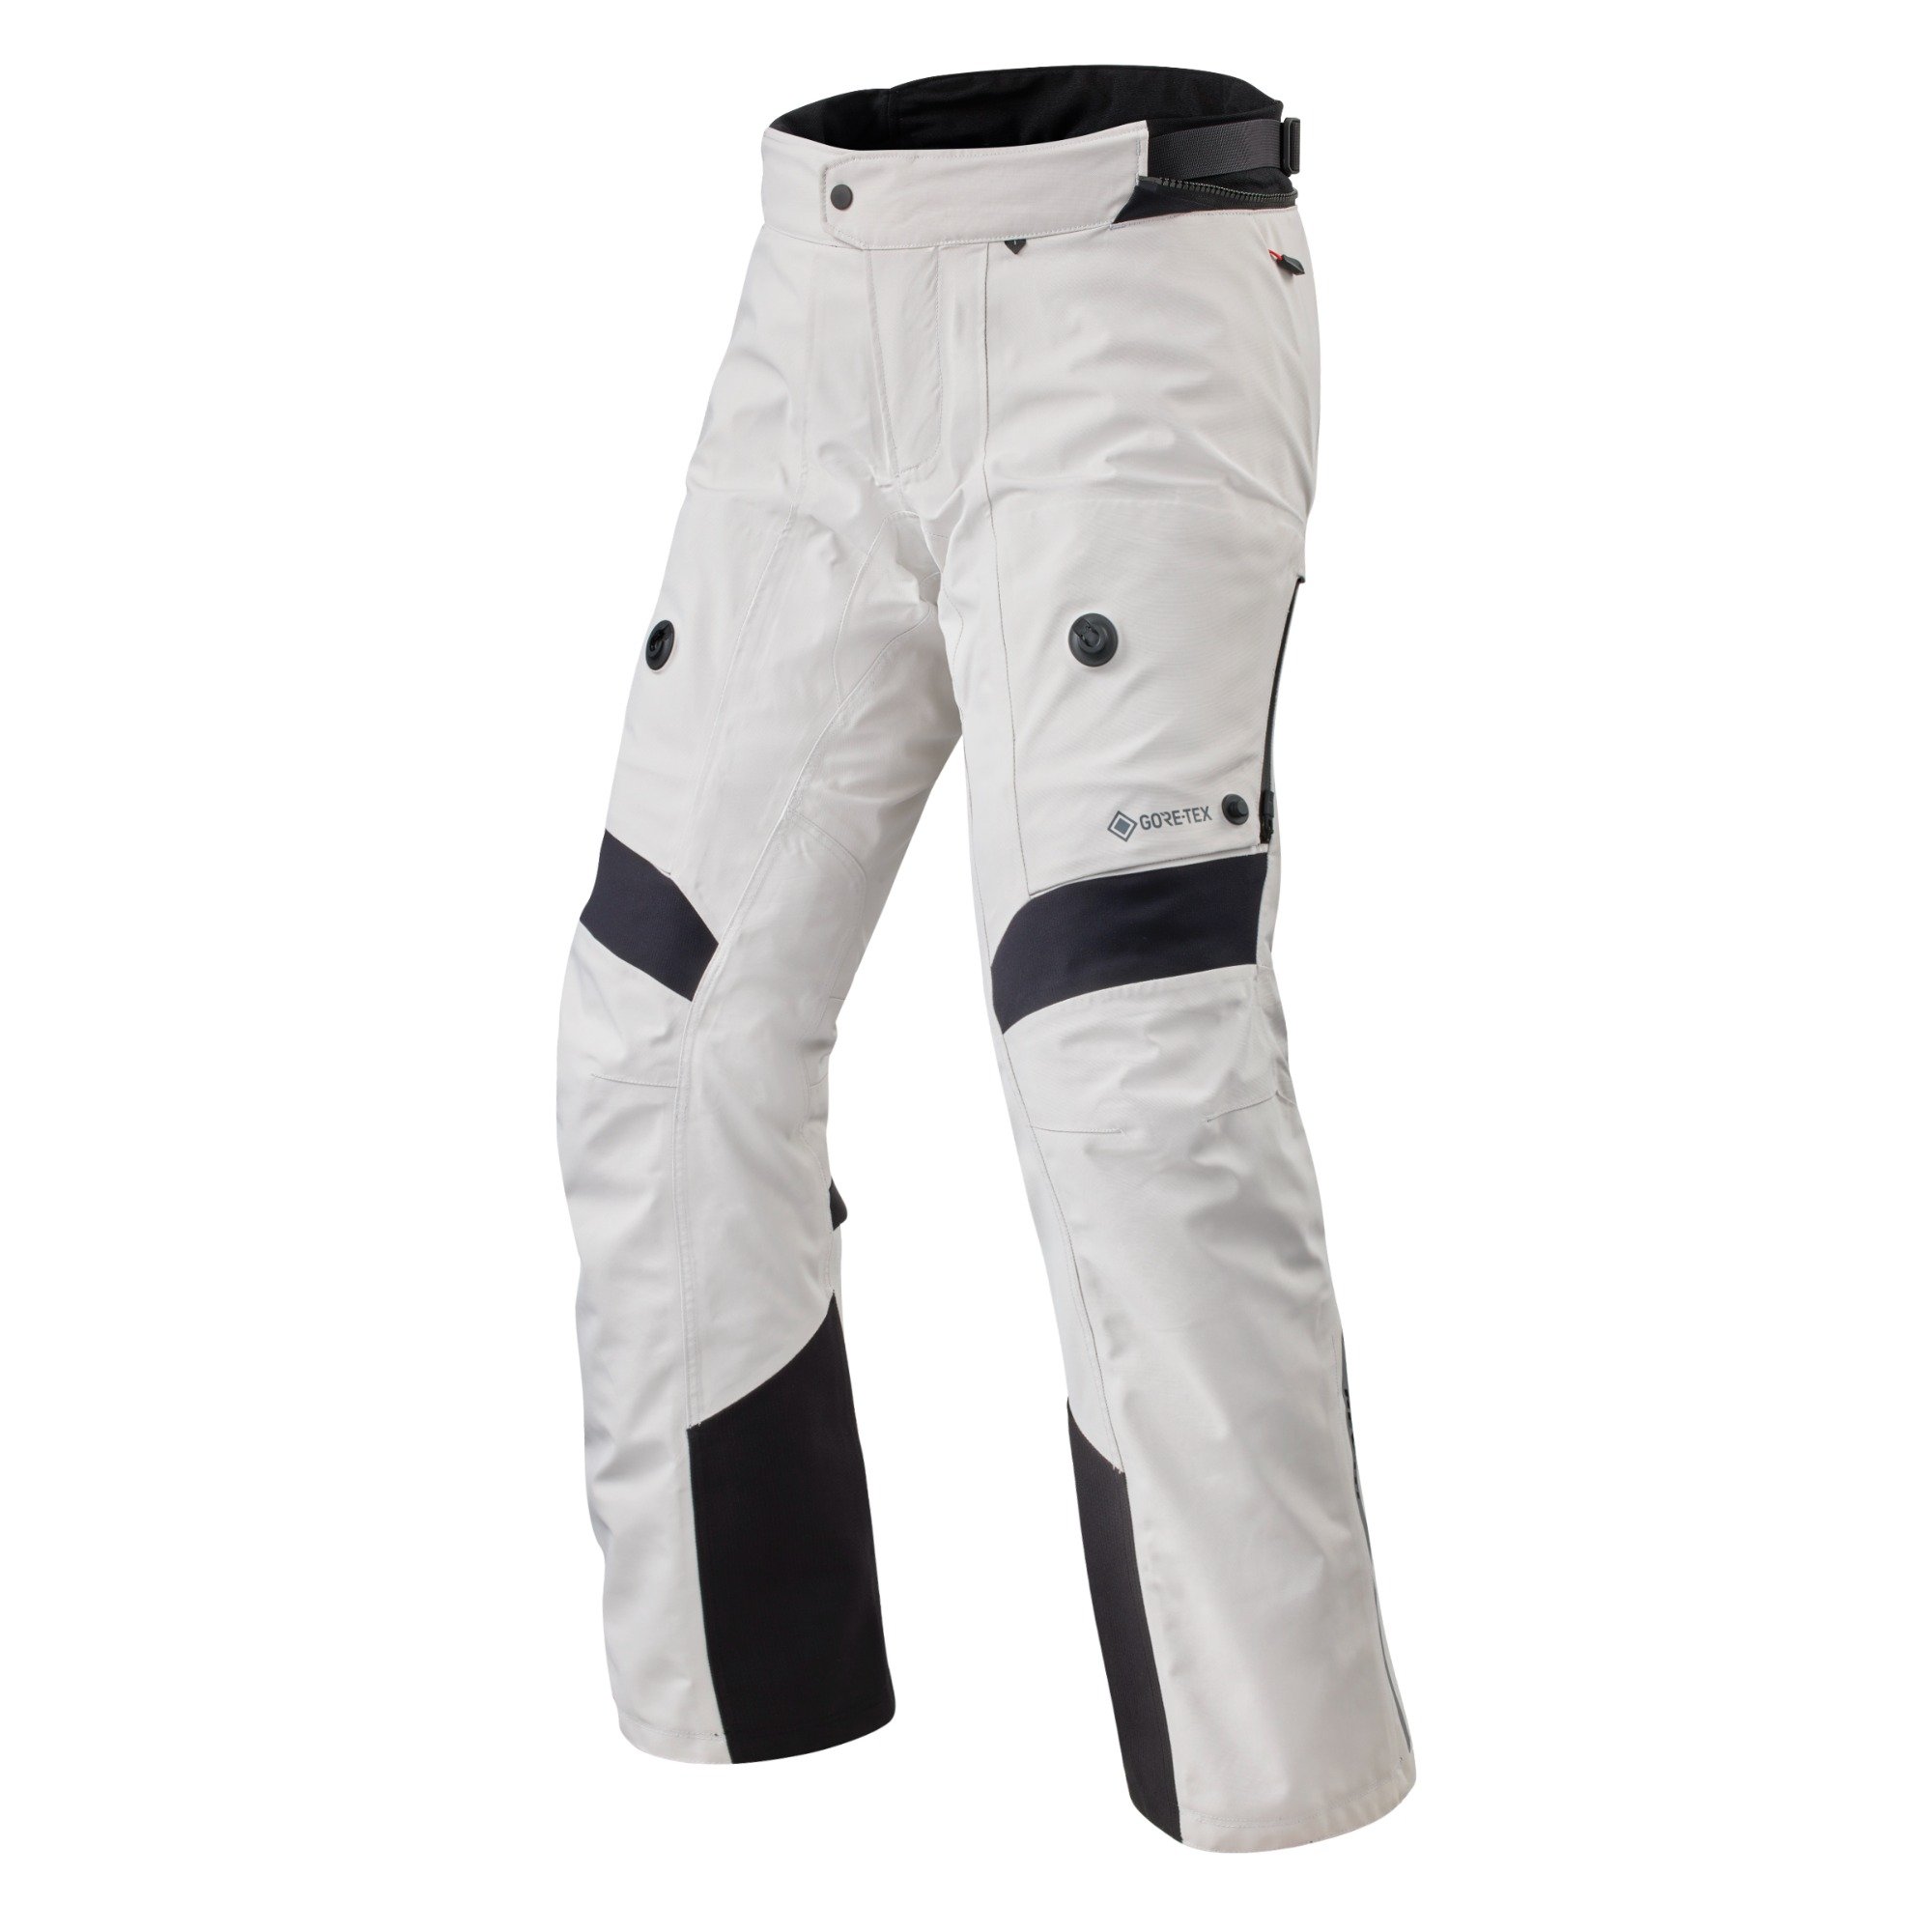 Image of REV'IT! Pants Poseidon 3 GTX Silver Black Short Motorcycle Pants Size L ID 8700001362658